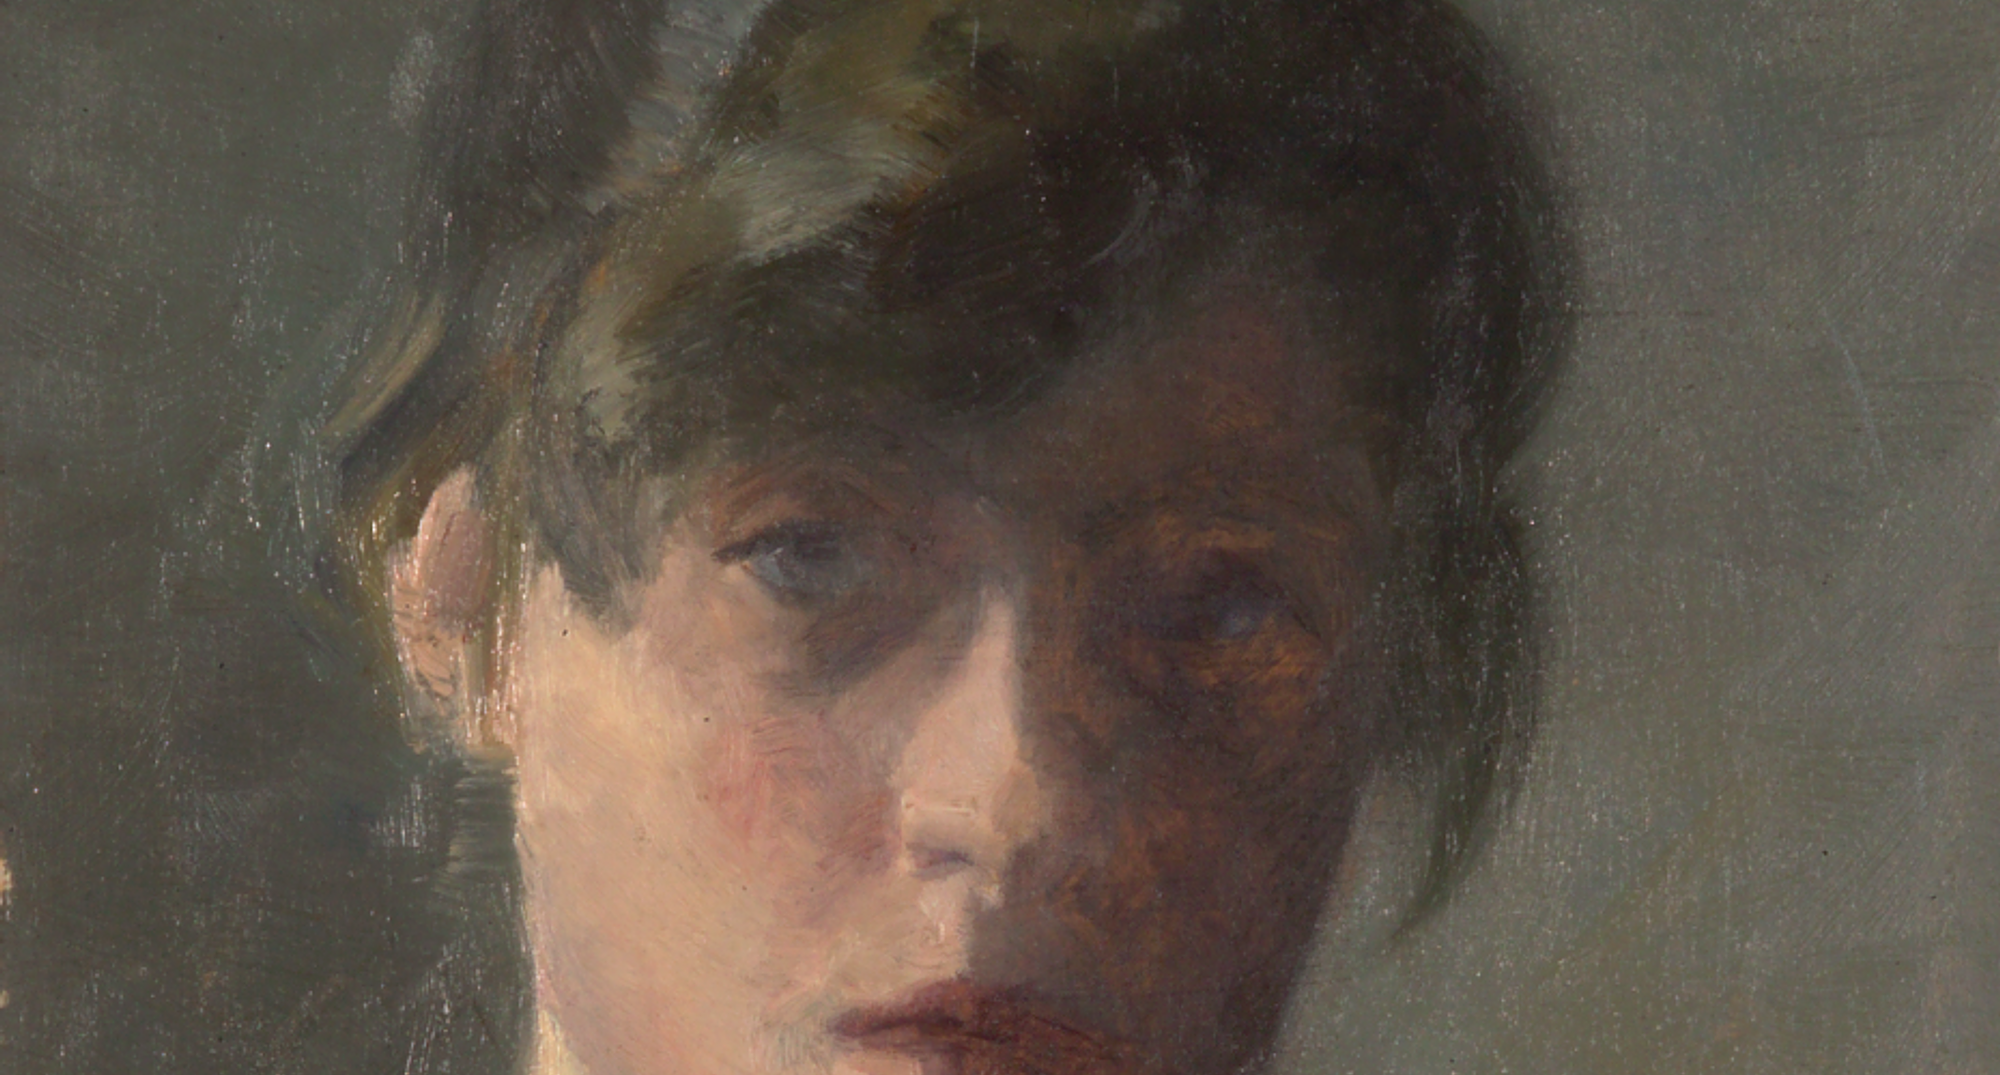 Marie Krøyer